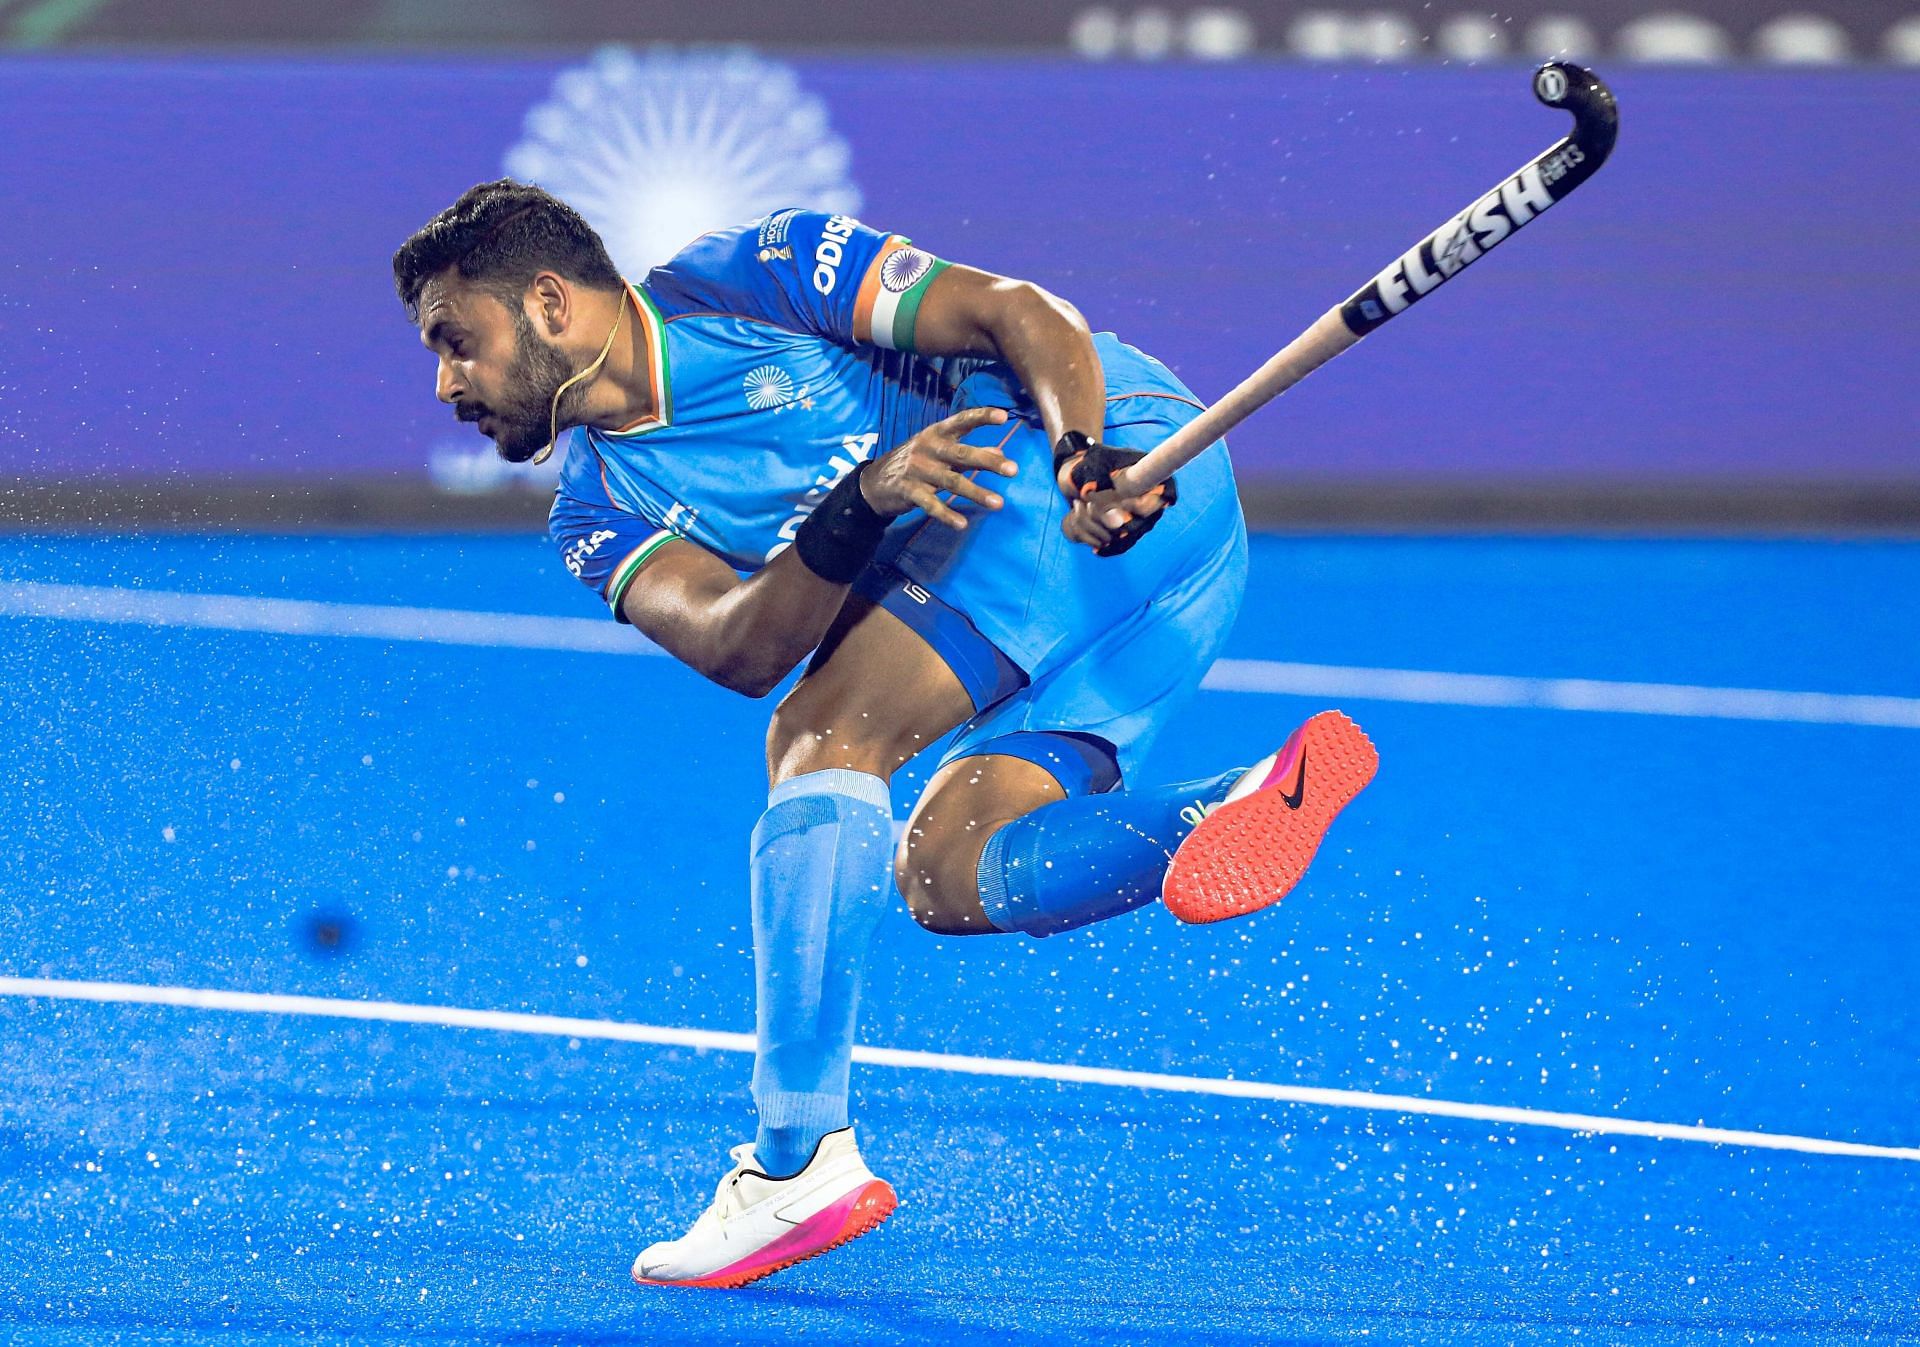 Harmanpreet Singh scored a brace in the Hockey World Cup game vs. Japan